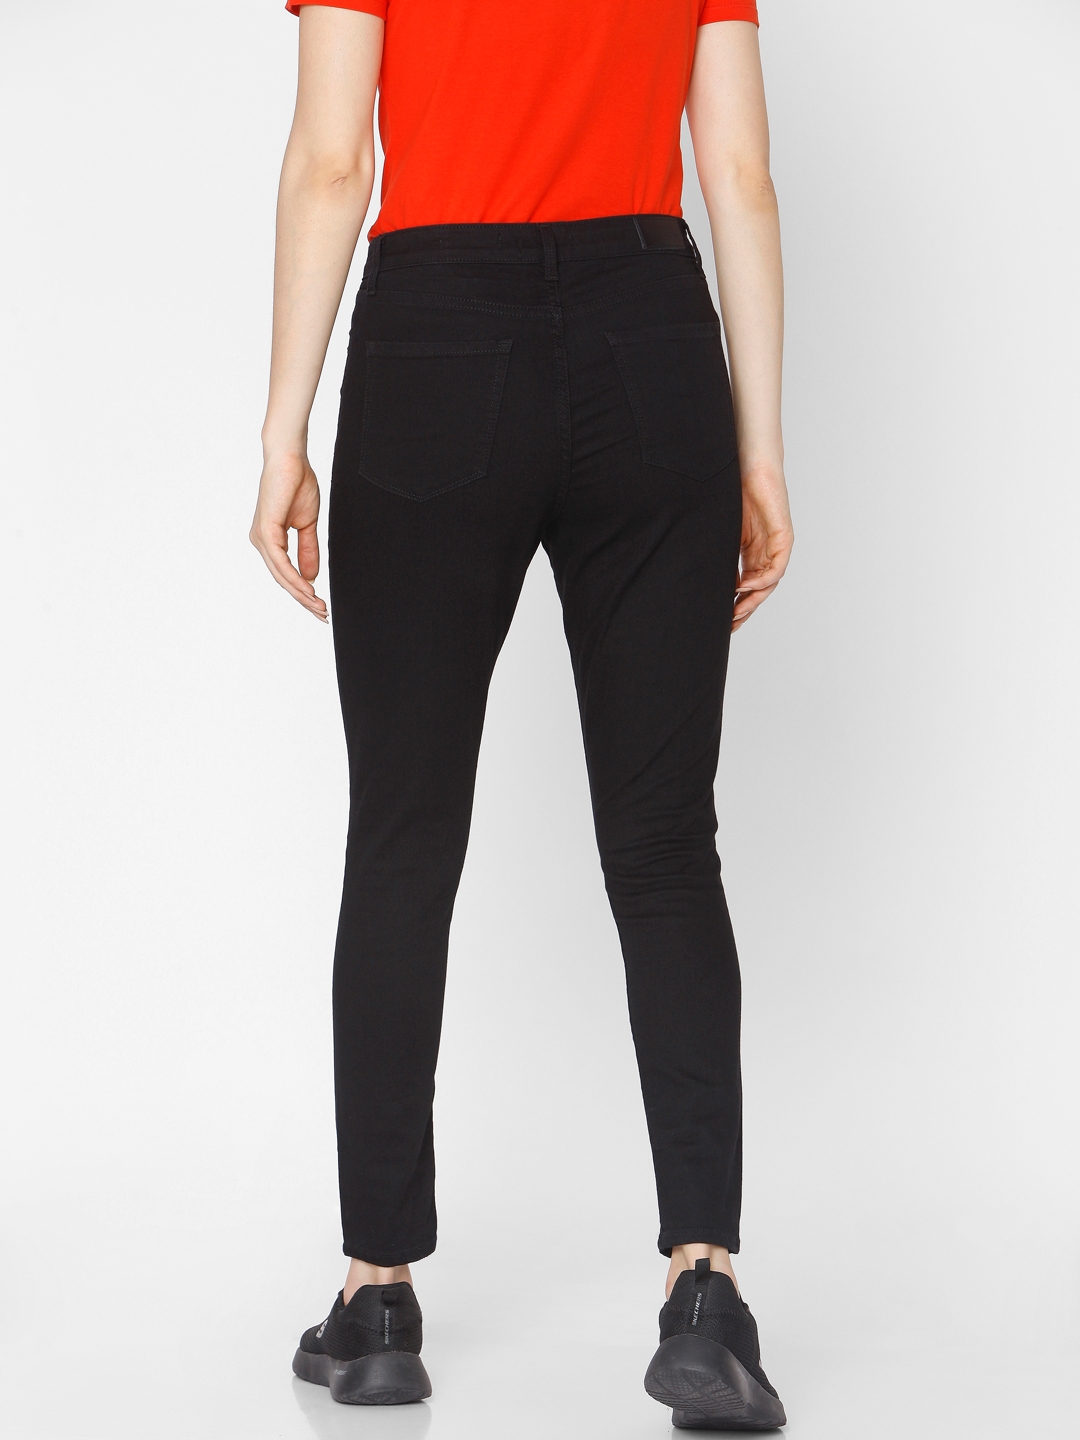 spykar | Women's Black Cotton Solid Slim Jeans 4